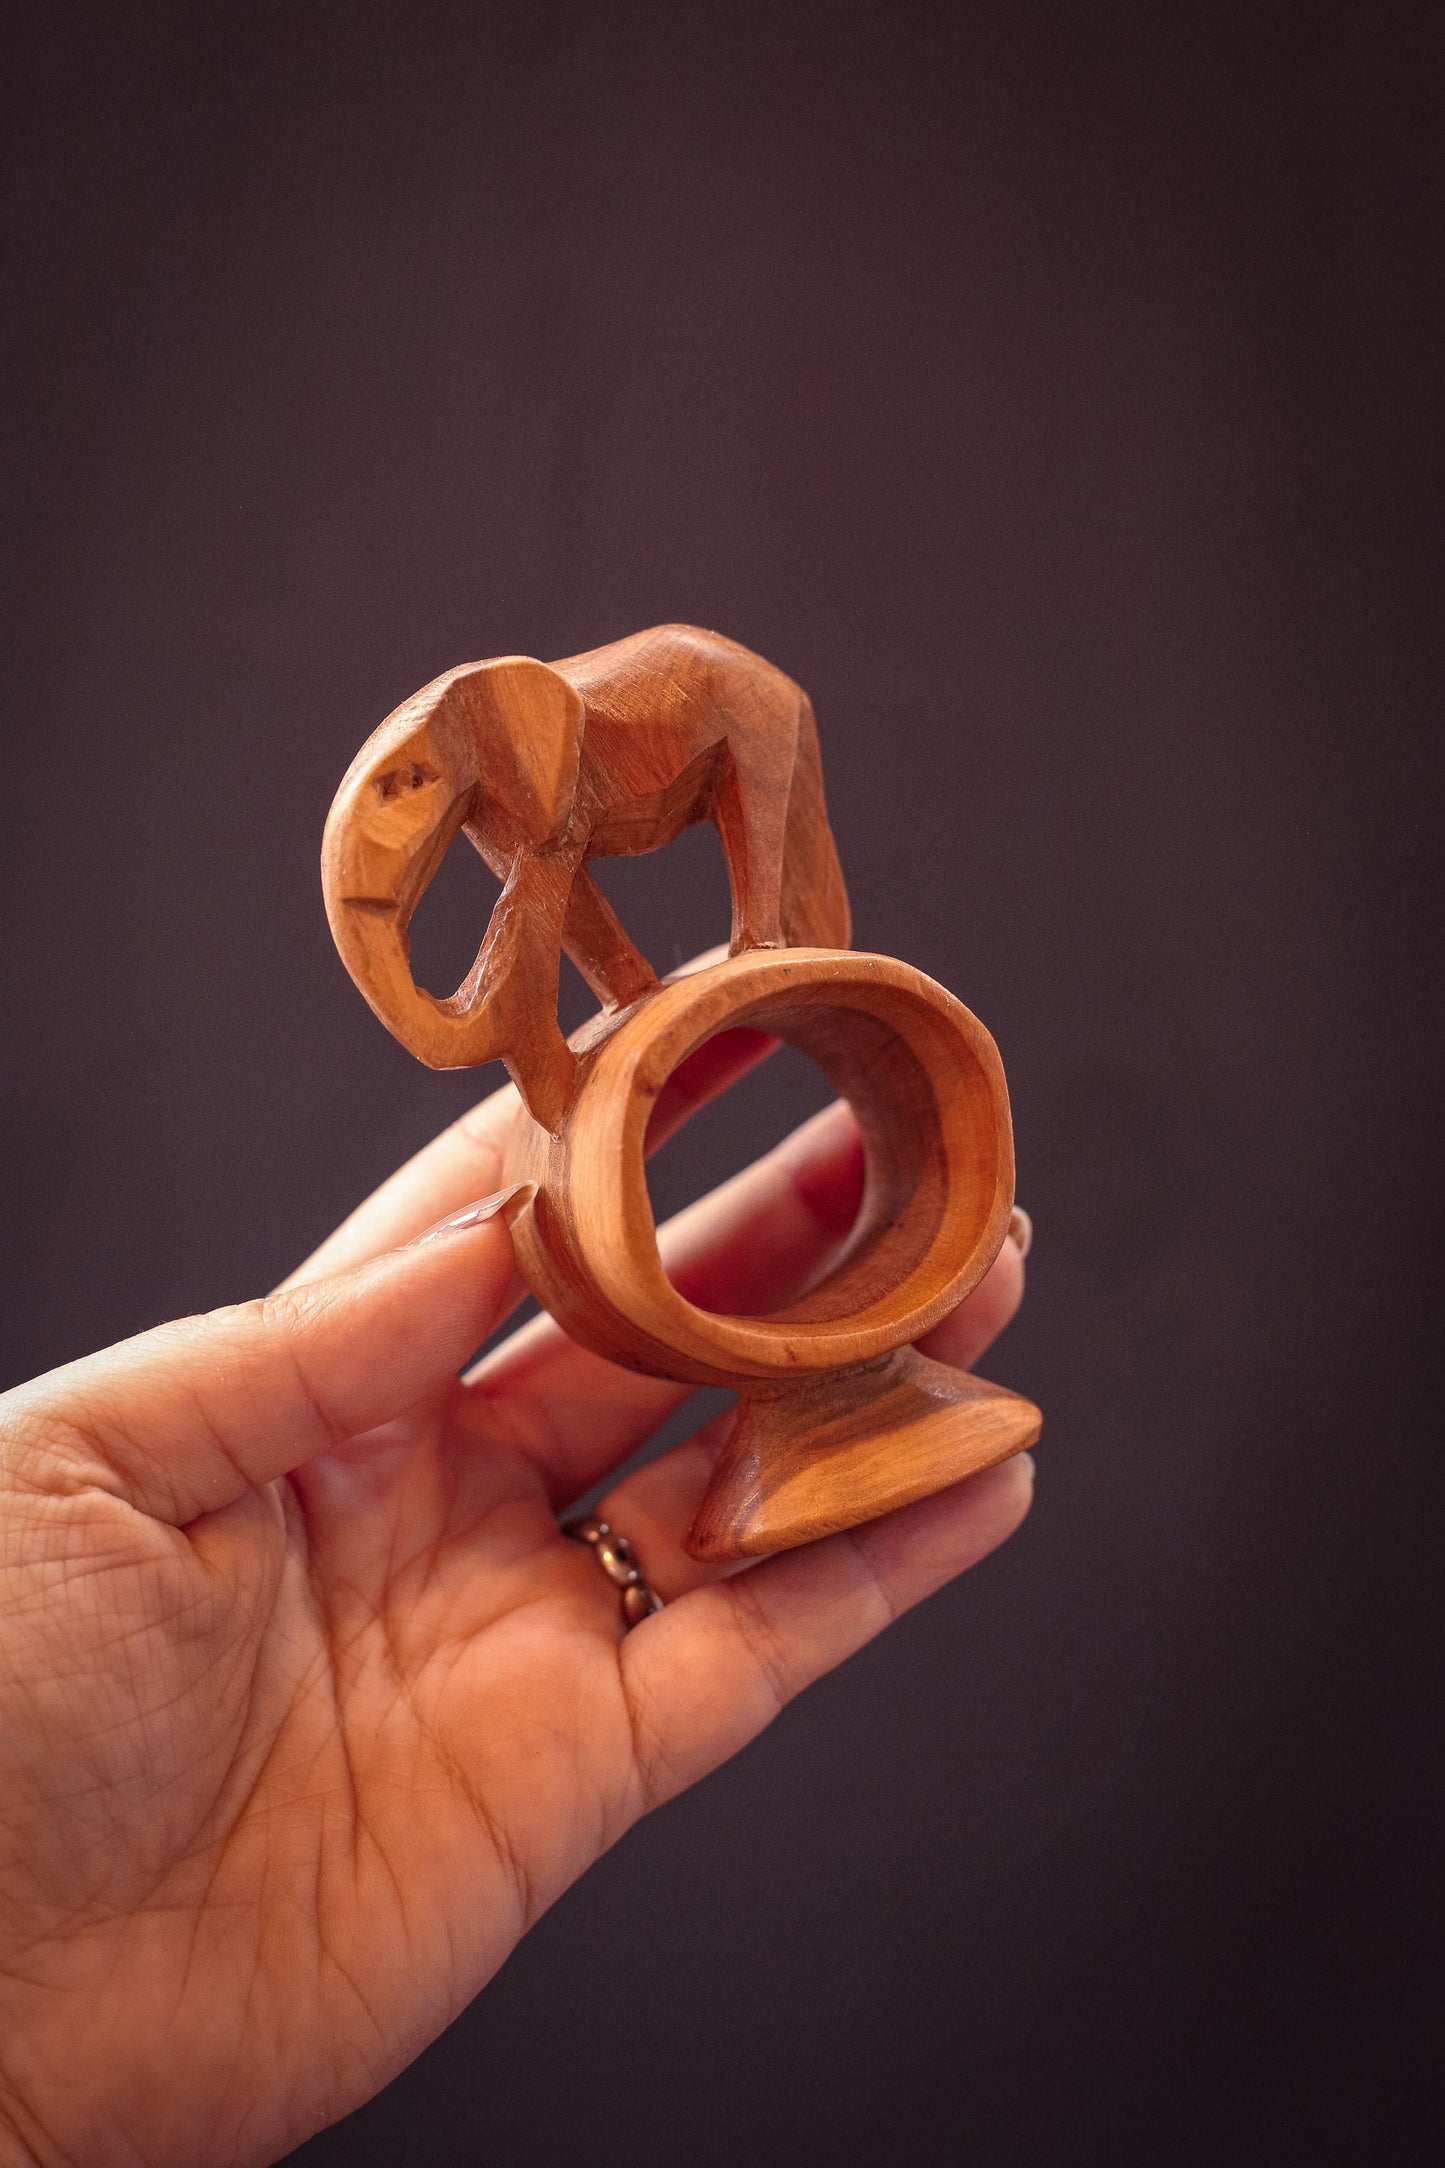 Hand Carved Wooden Animal Napkin Rings - Vintage Wood Napkin Rings